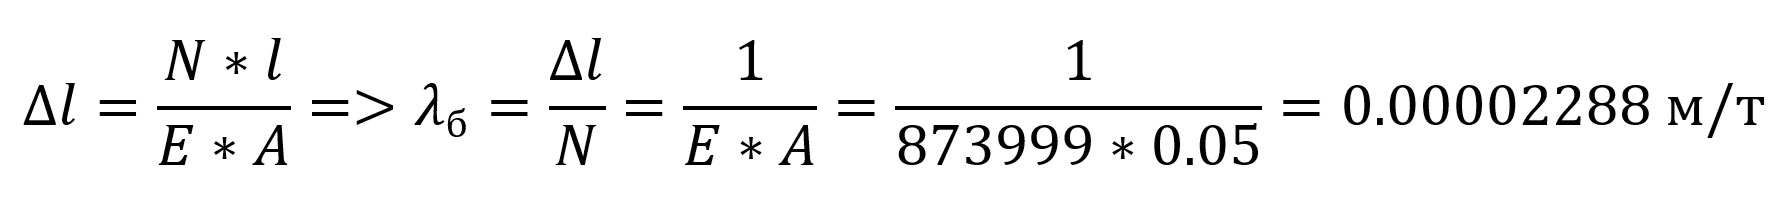 formula-6.png